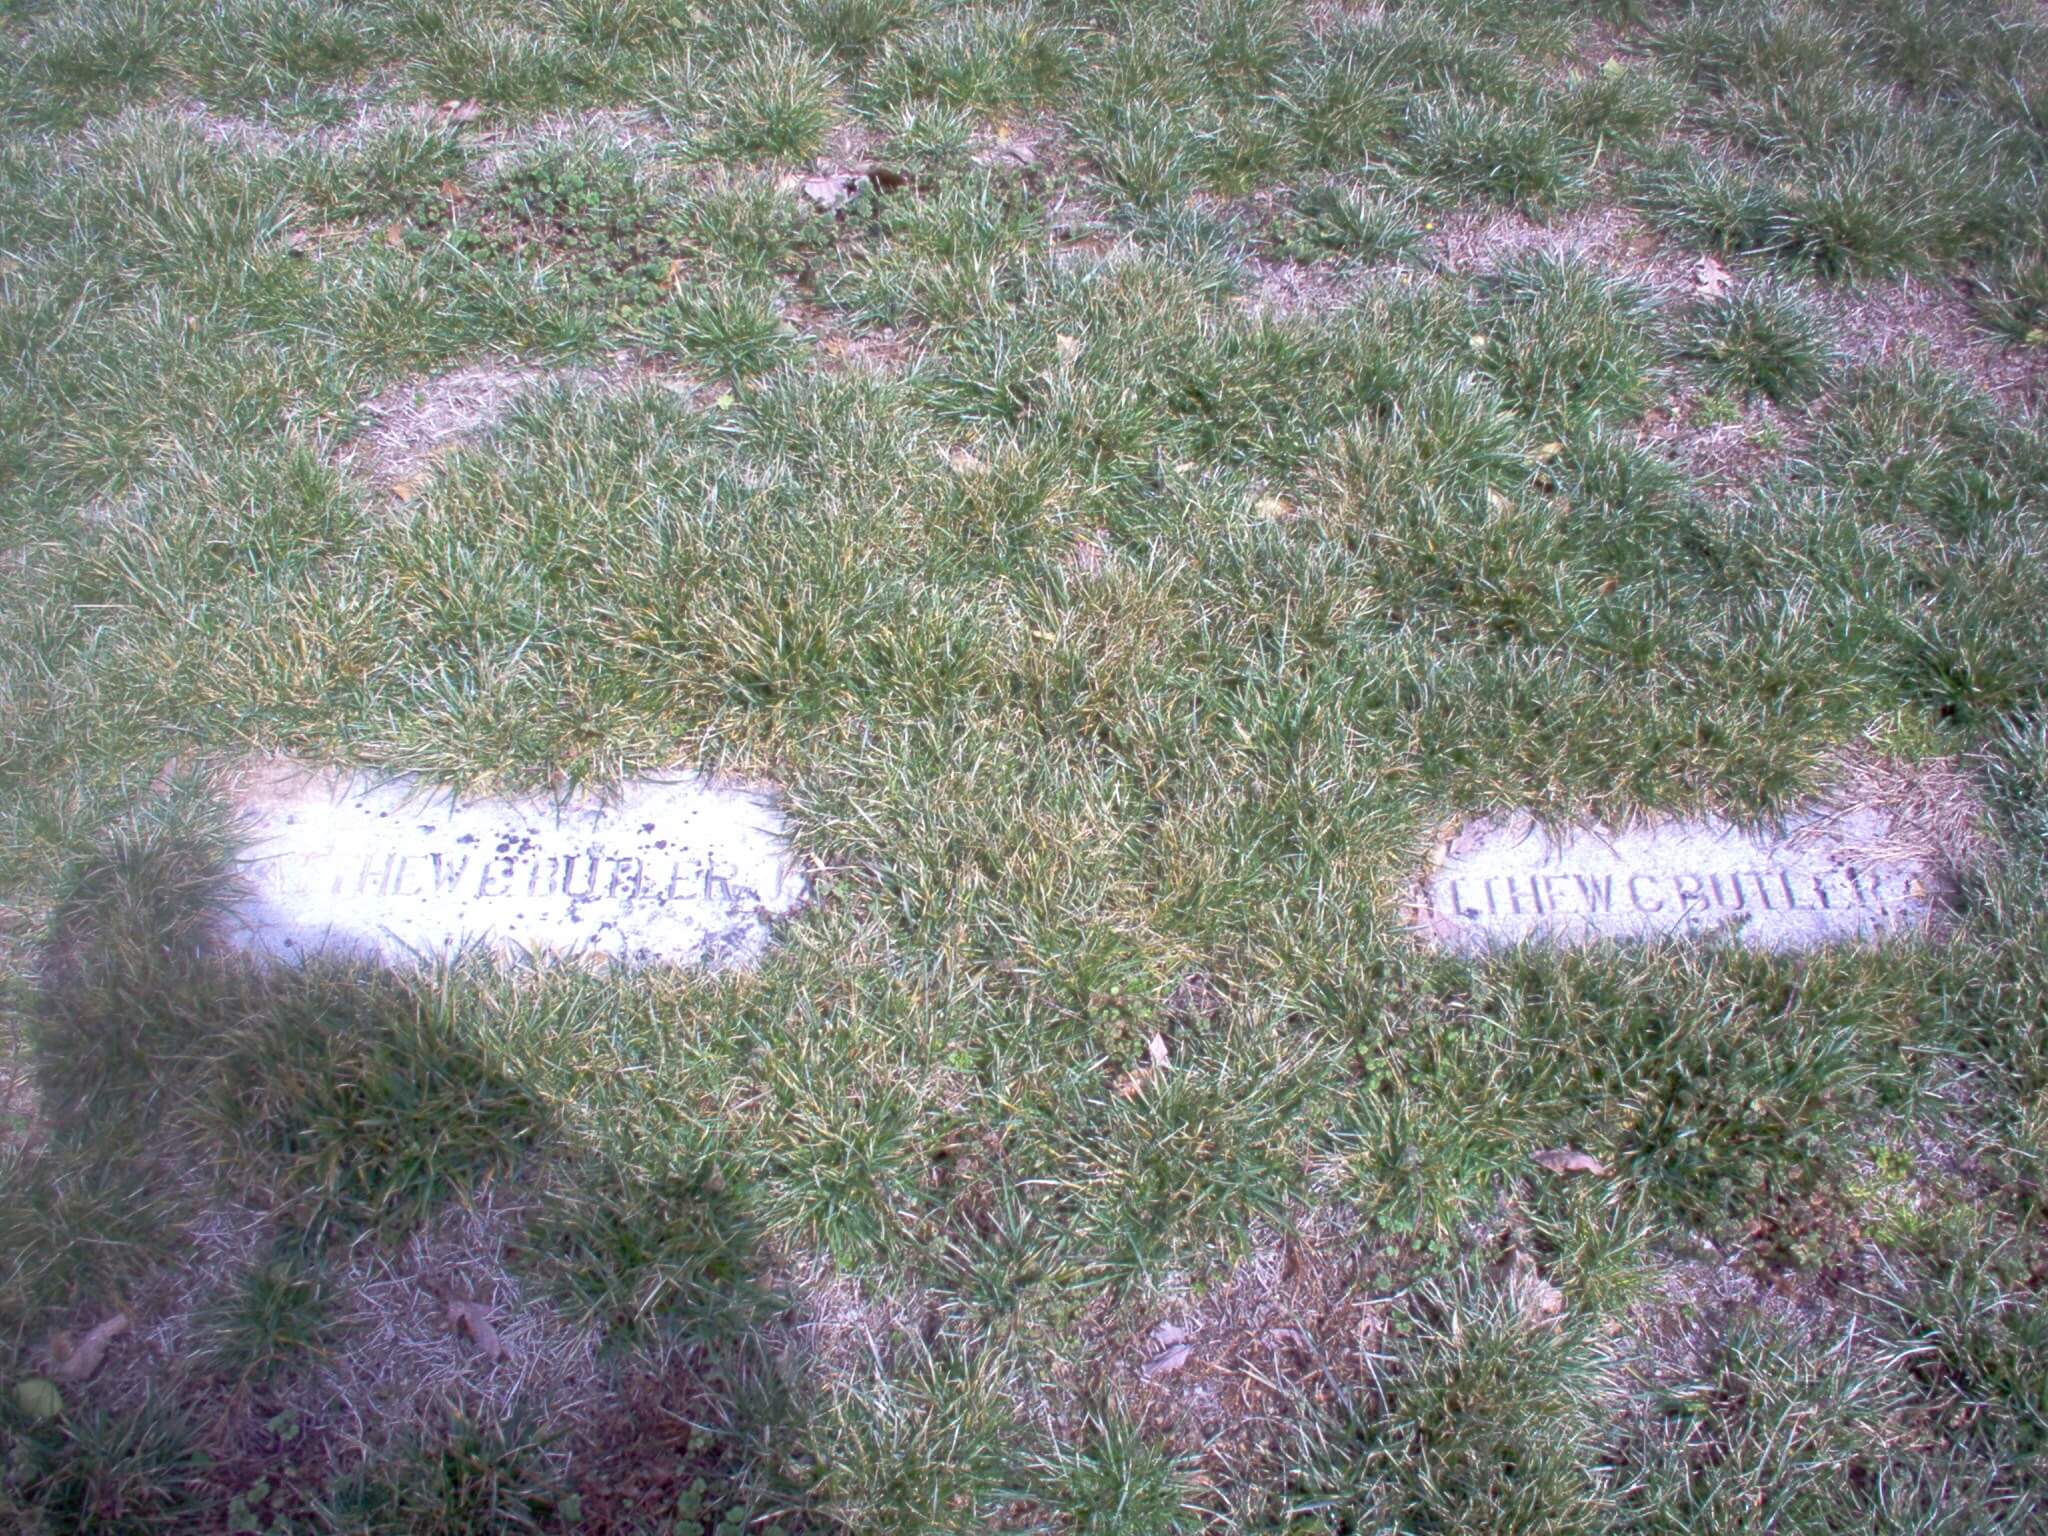 butler-family-gravesite-photo-march-2007-003